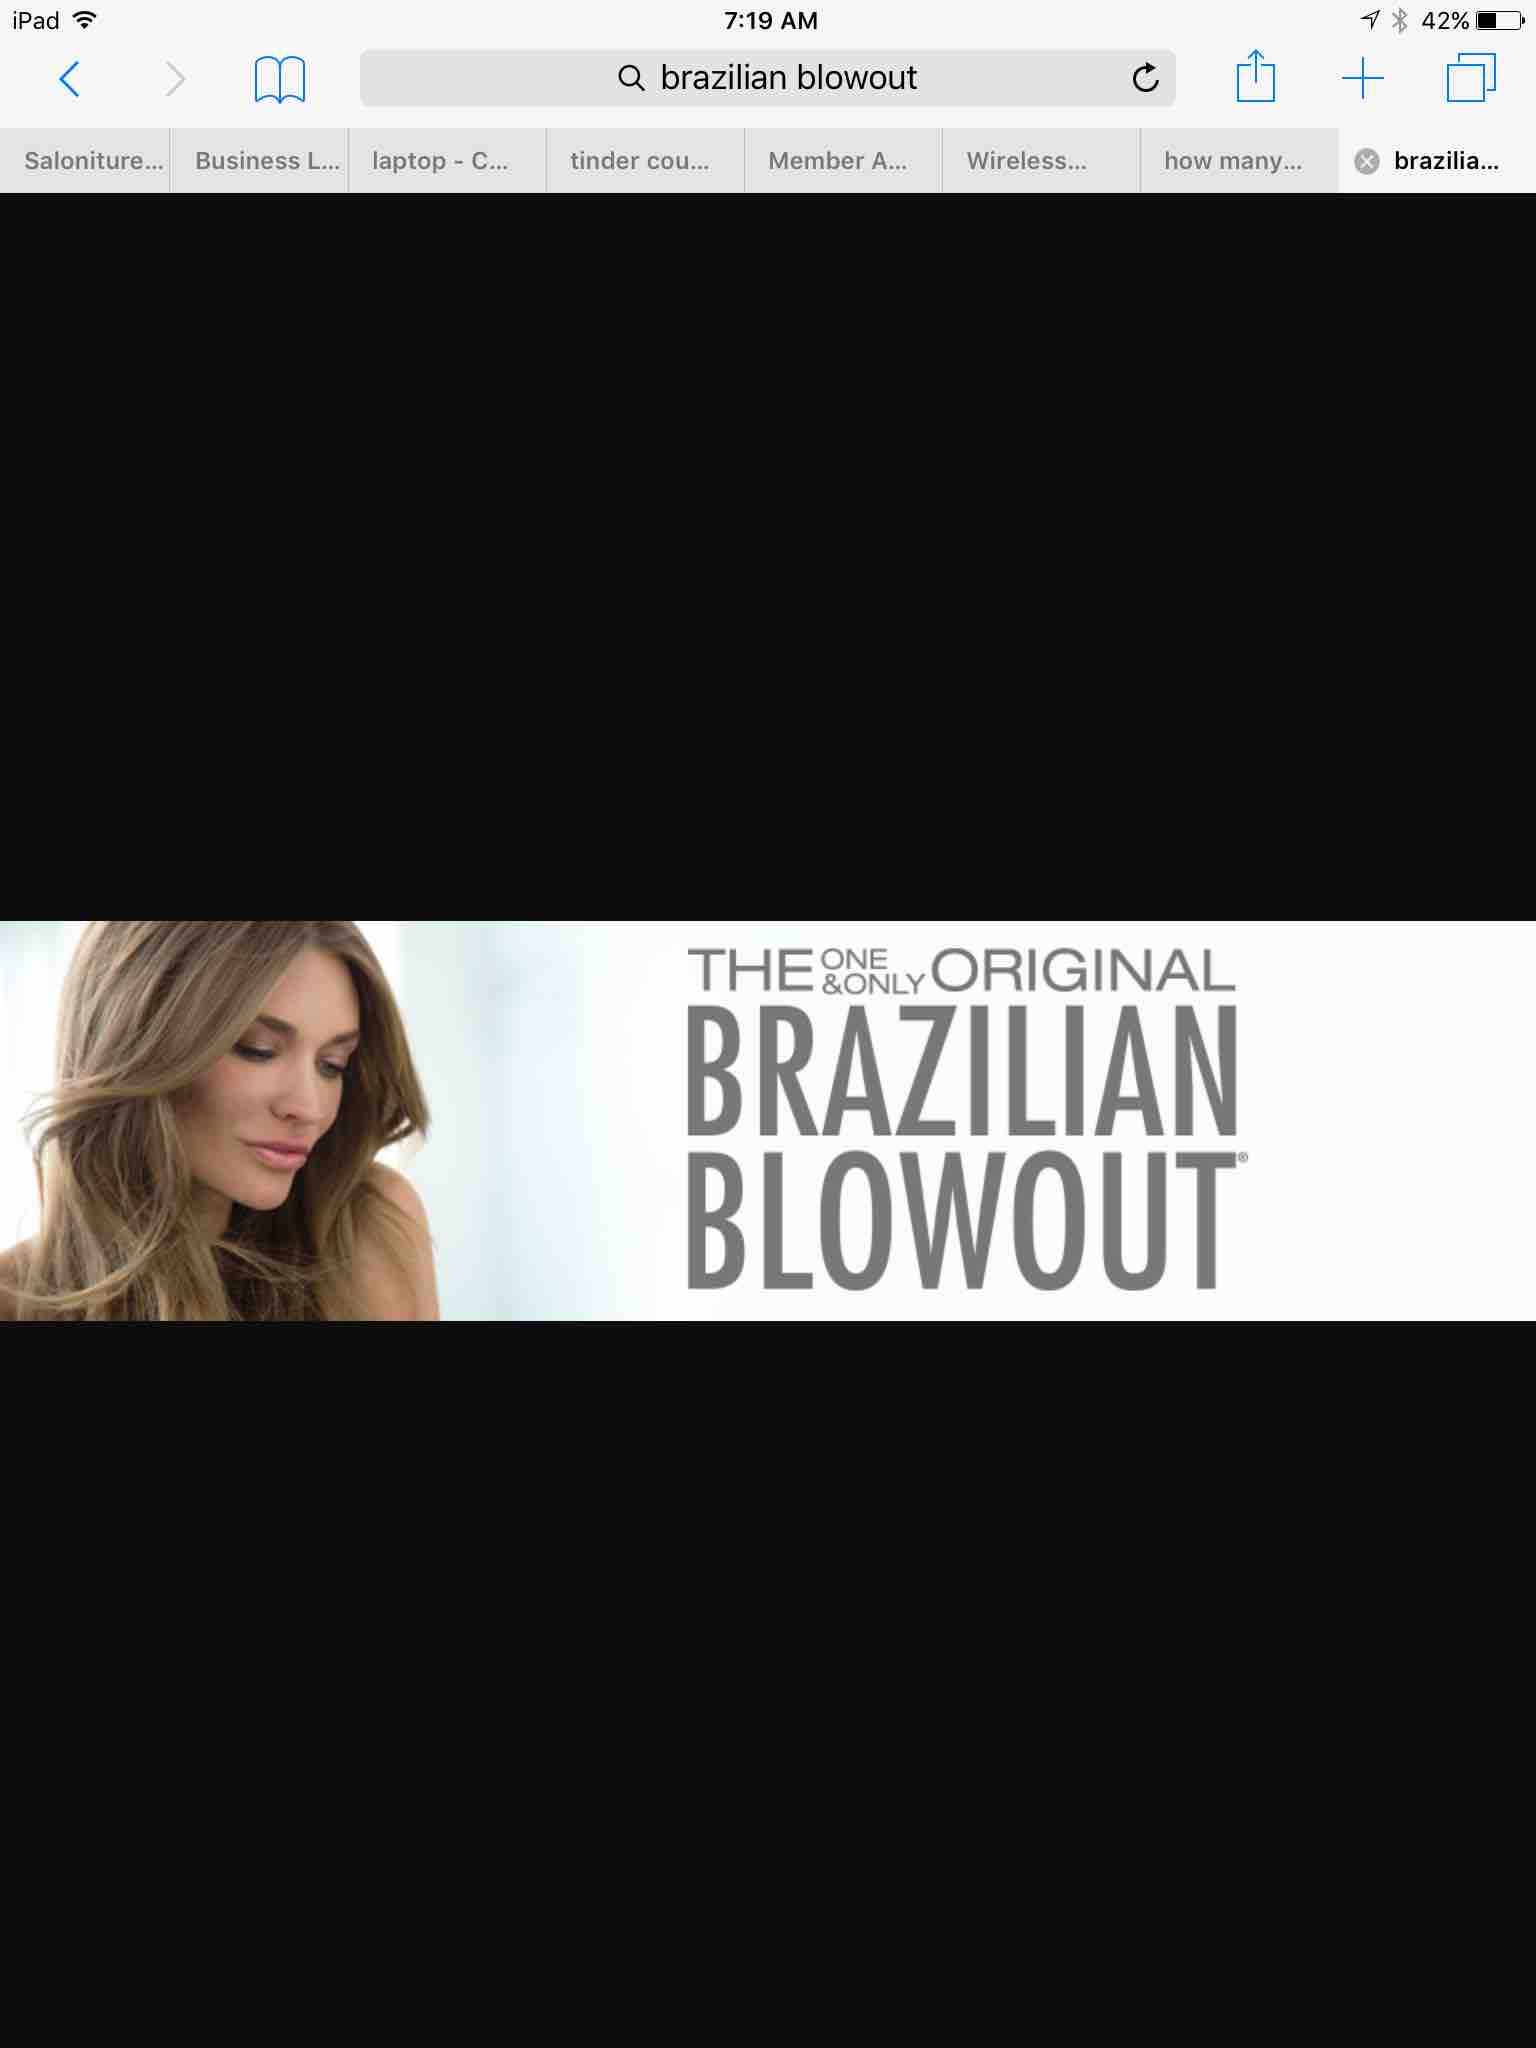 Brazilian Blowout Keratin